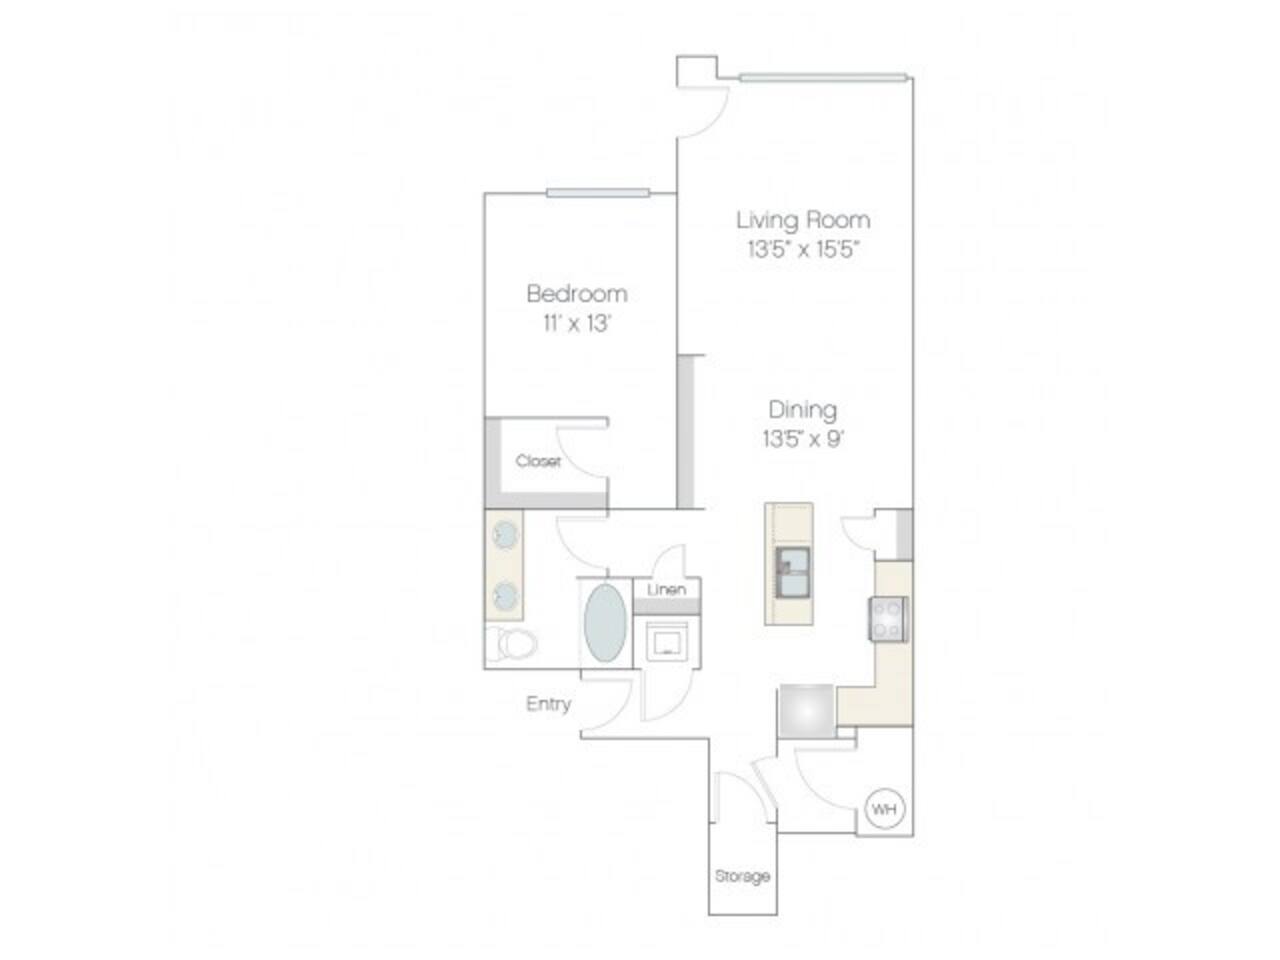 Floorplan diagram for AT1.R, showing 1 bedroom